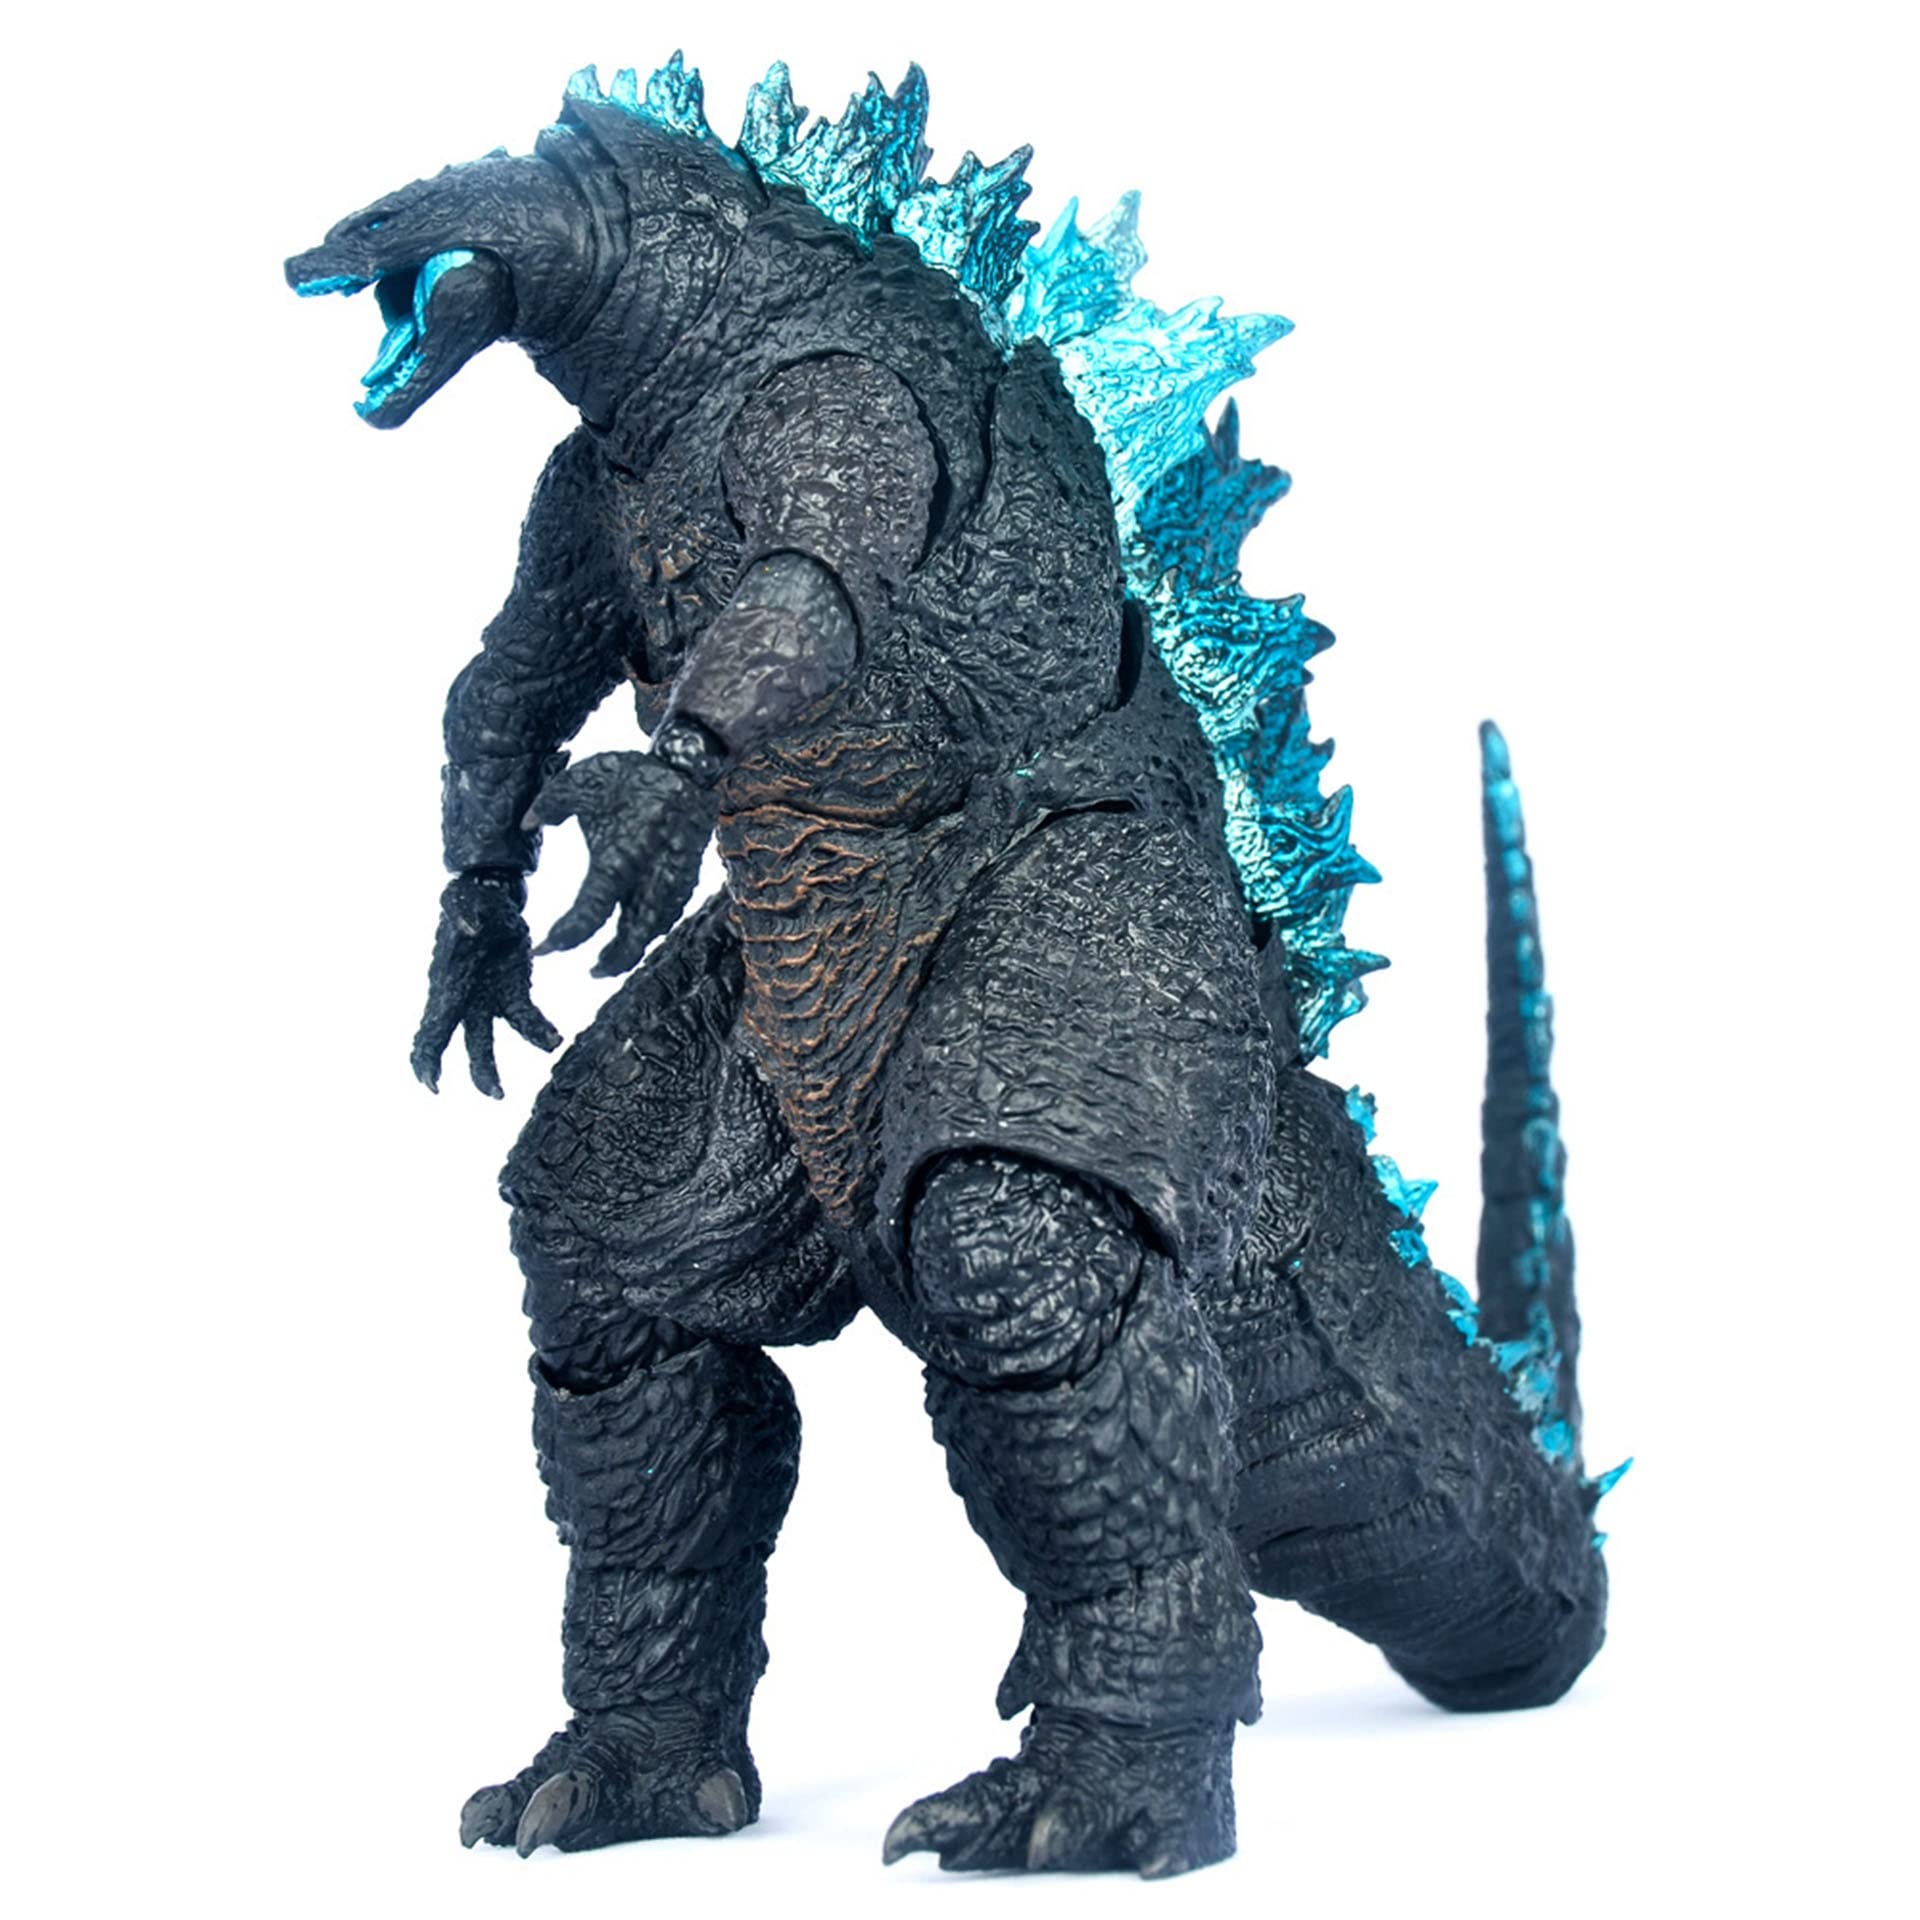 lilongjiao 2021 Filmversion von Shm Godzilla vs. König Kong Behemoth Super bewegliche Spielzeug Handgemachte Modell Ornamente